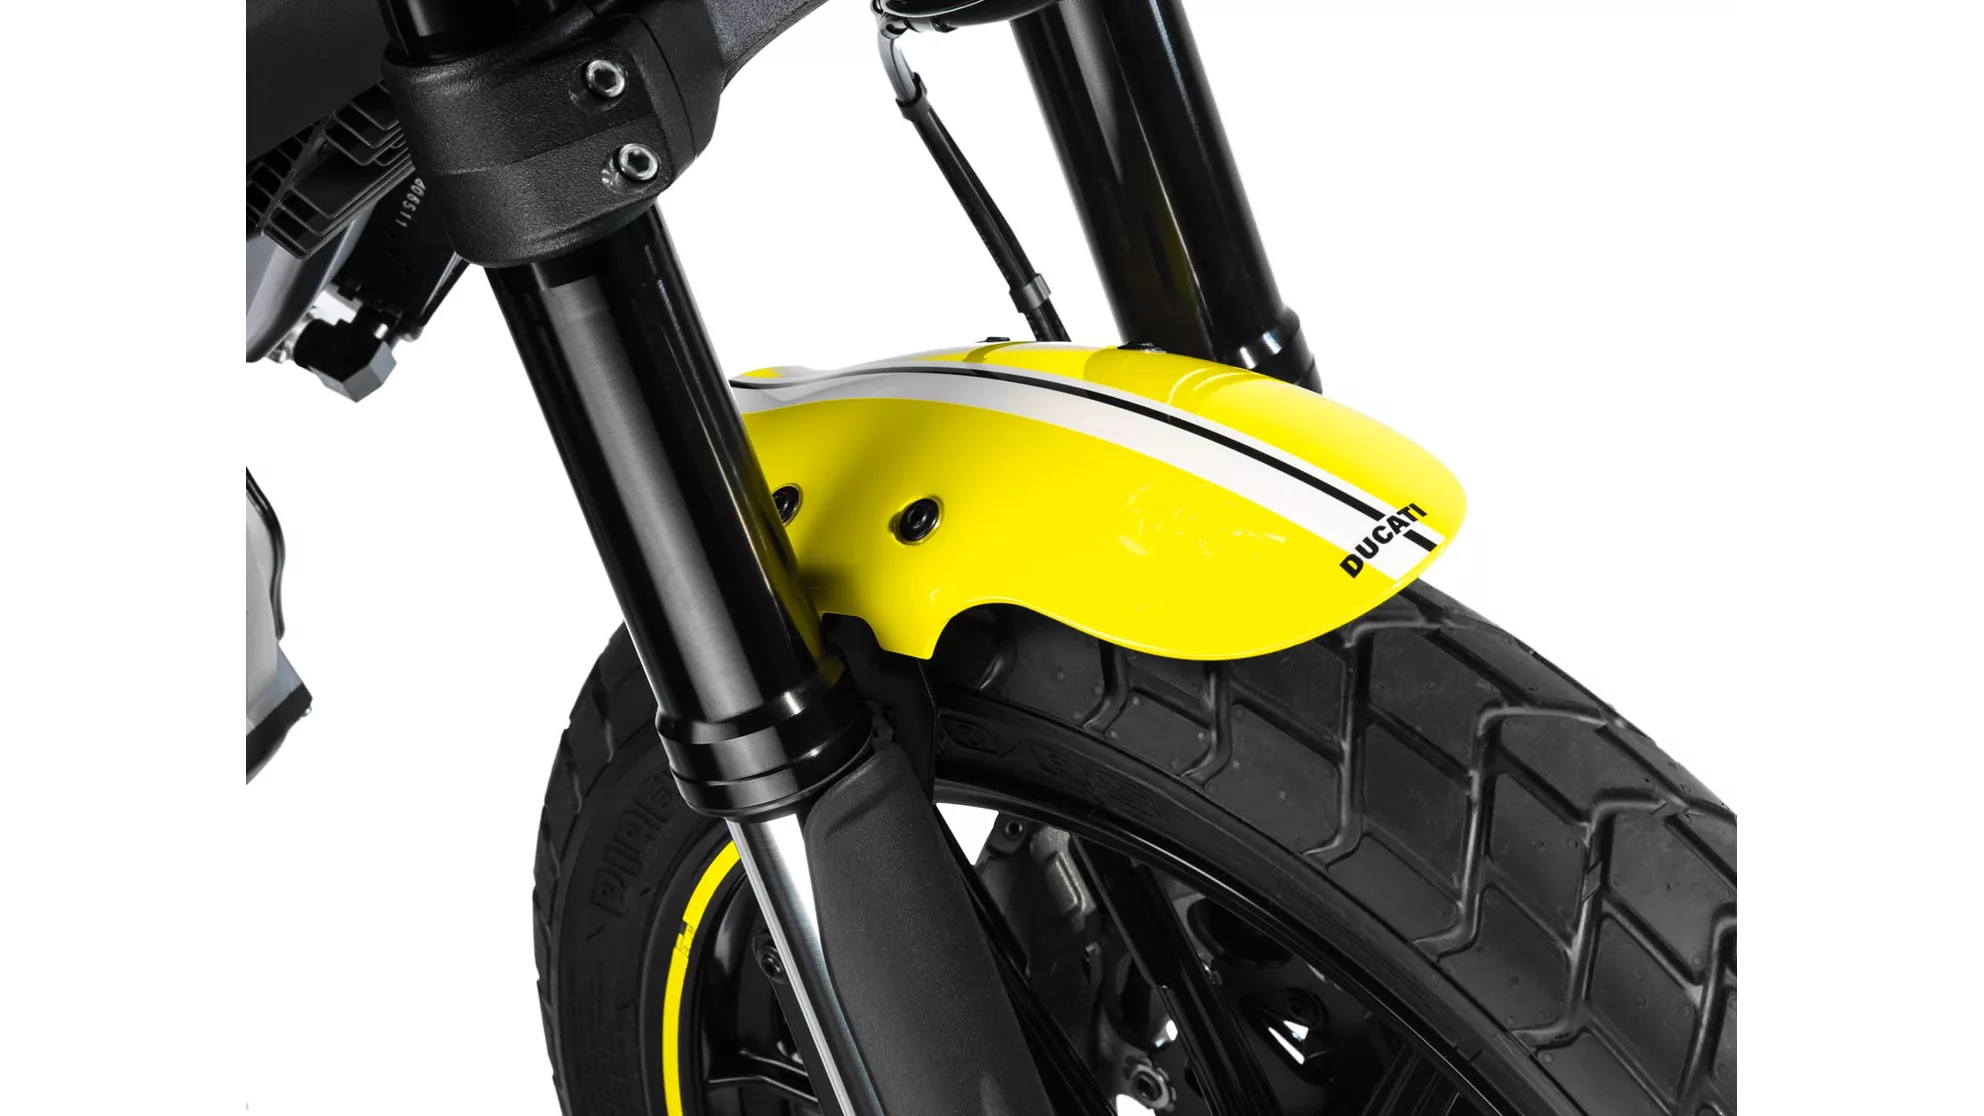 Ducati Scrambler Flat Track Pro - Image 6